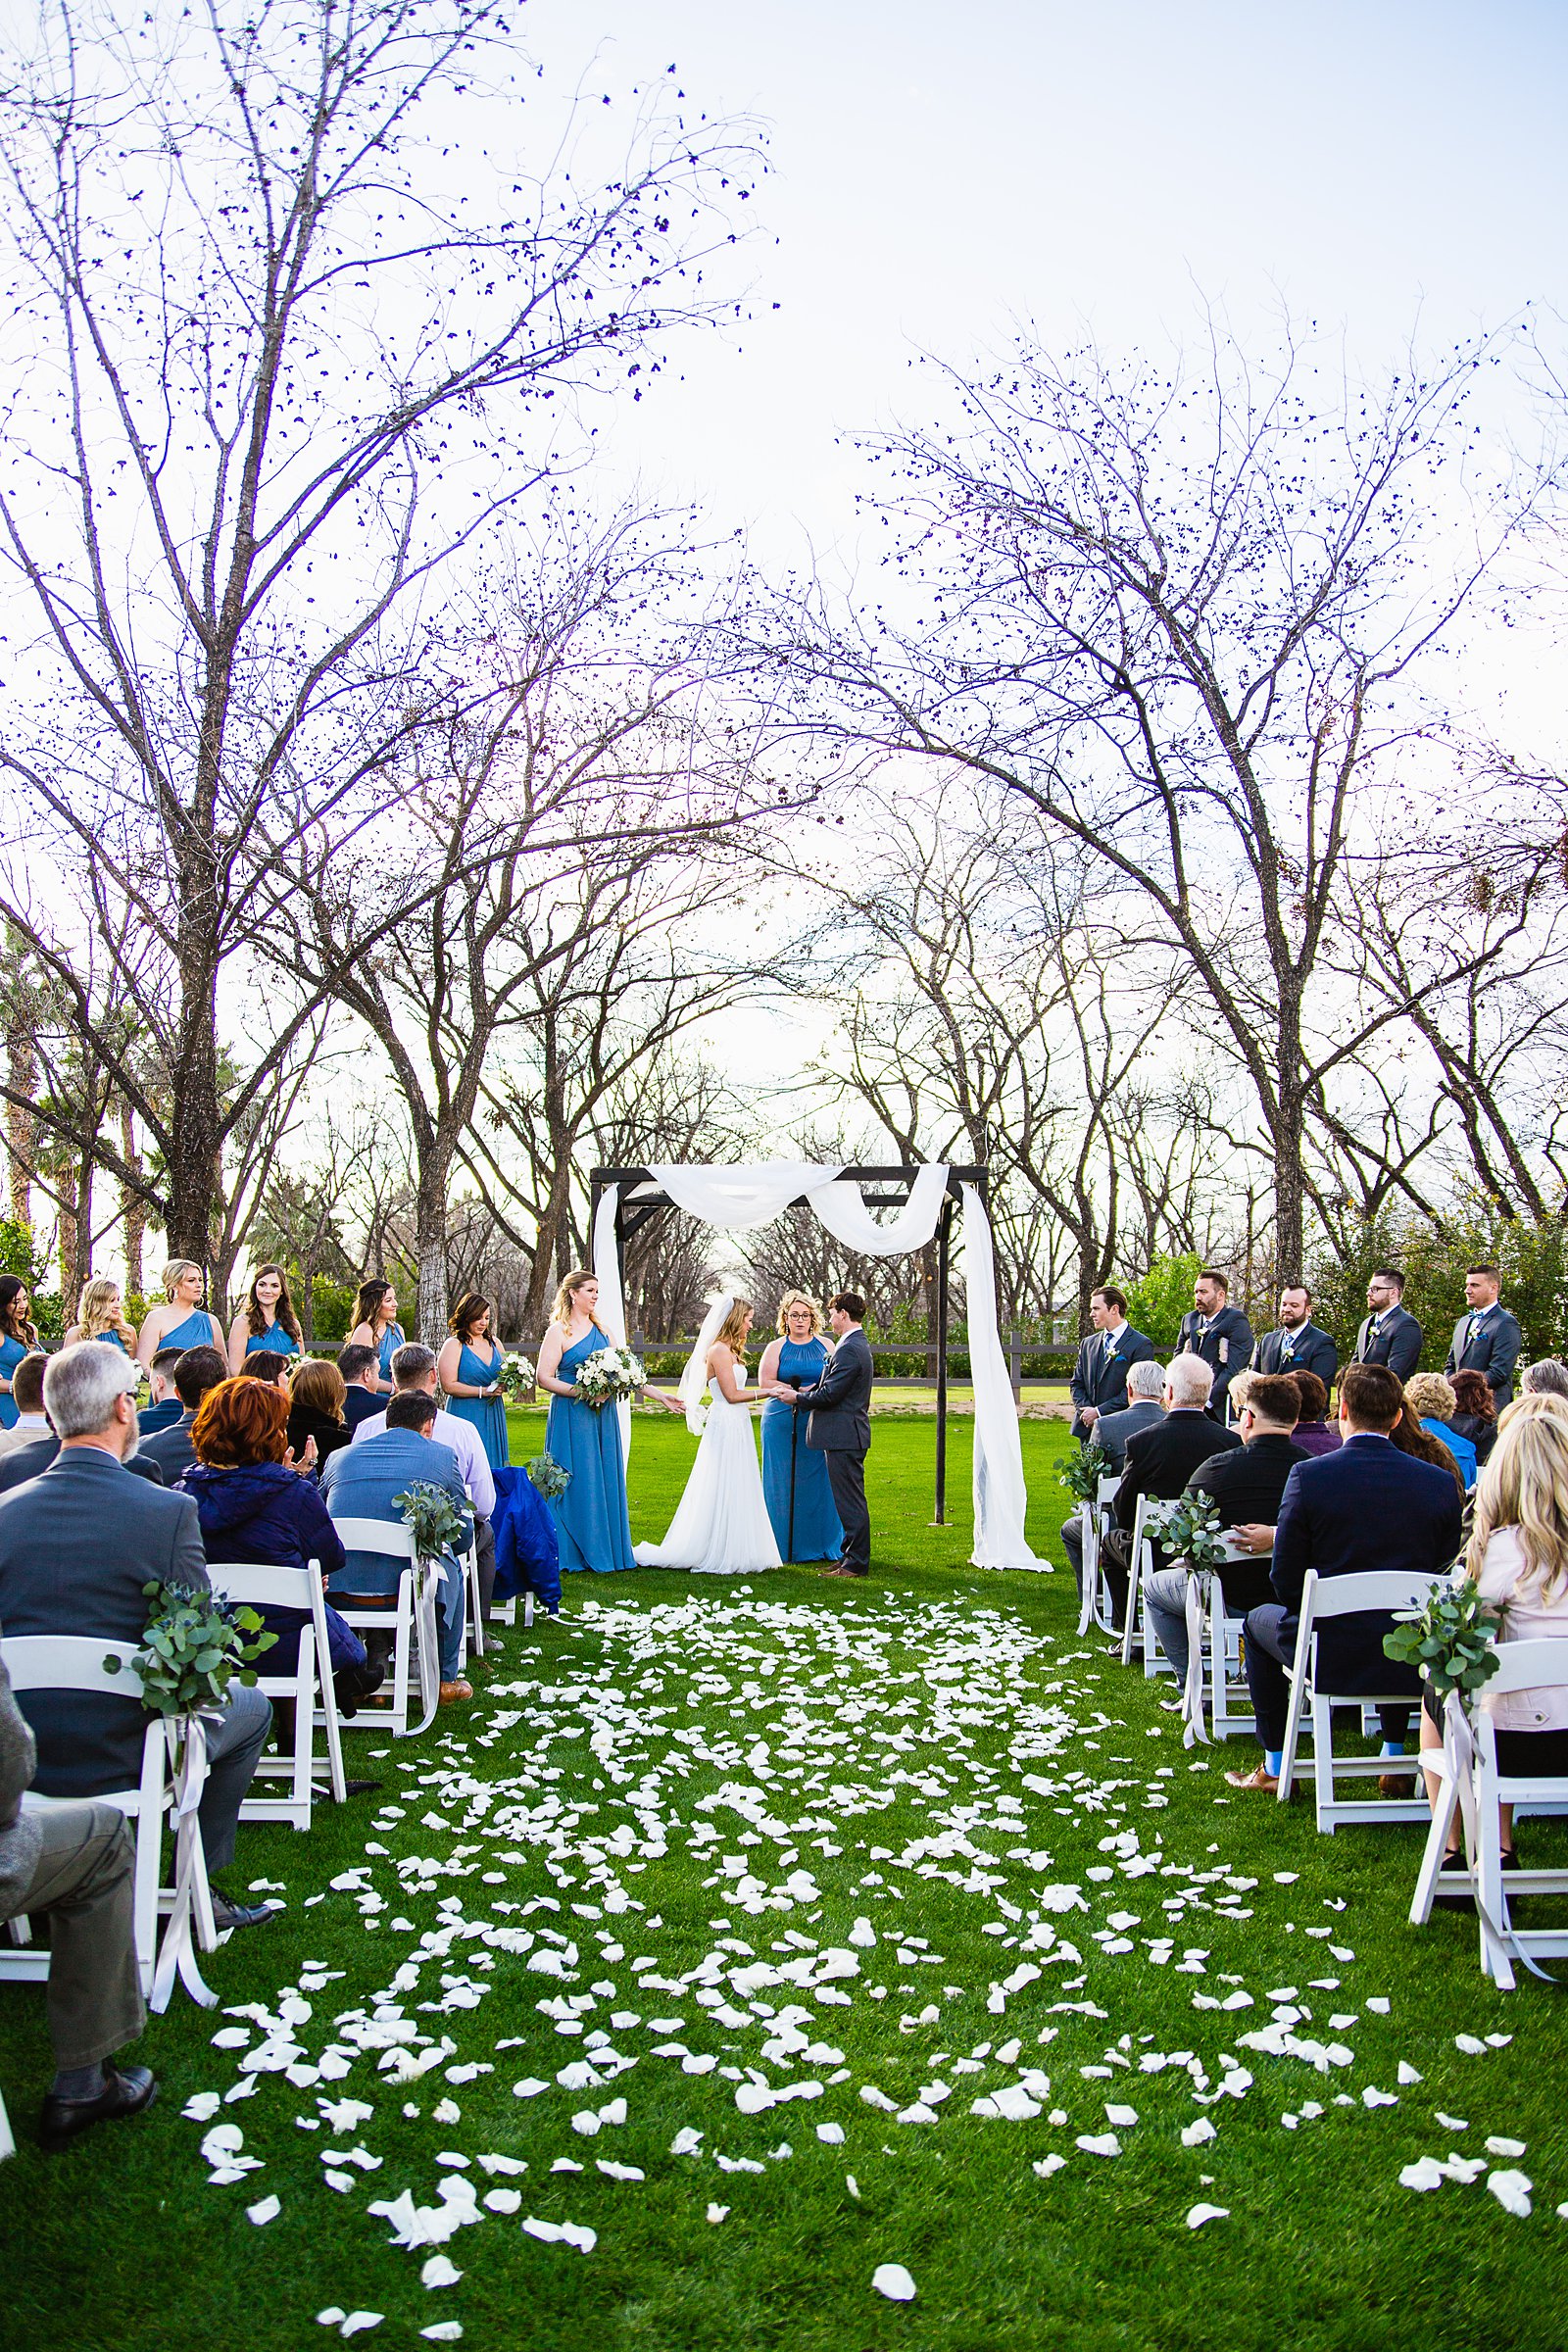 Wedding ceremony at Venue At The Grove by Arizona wedding photographer PMA Photography.